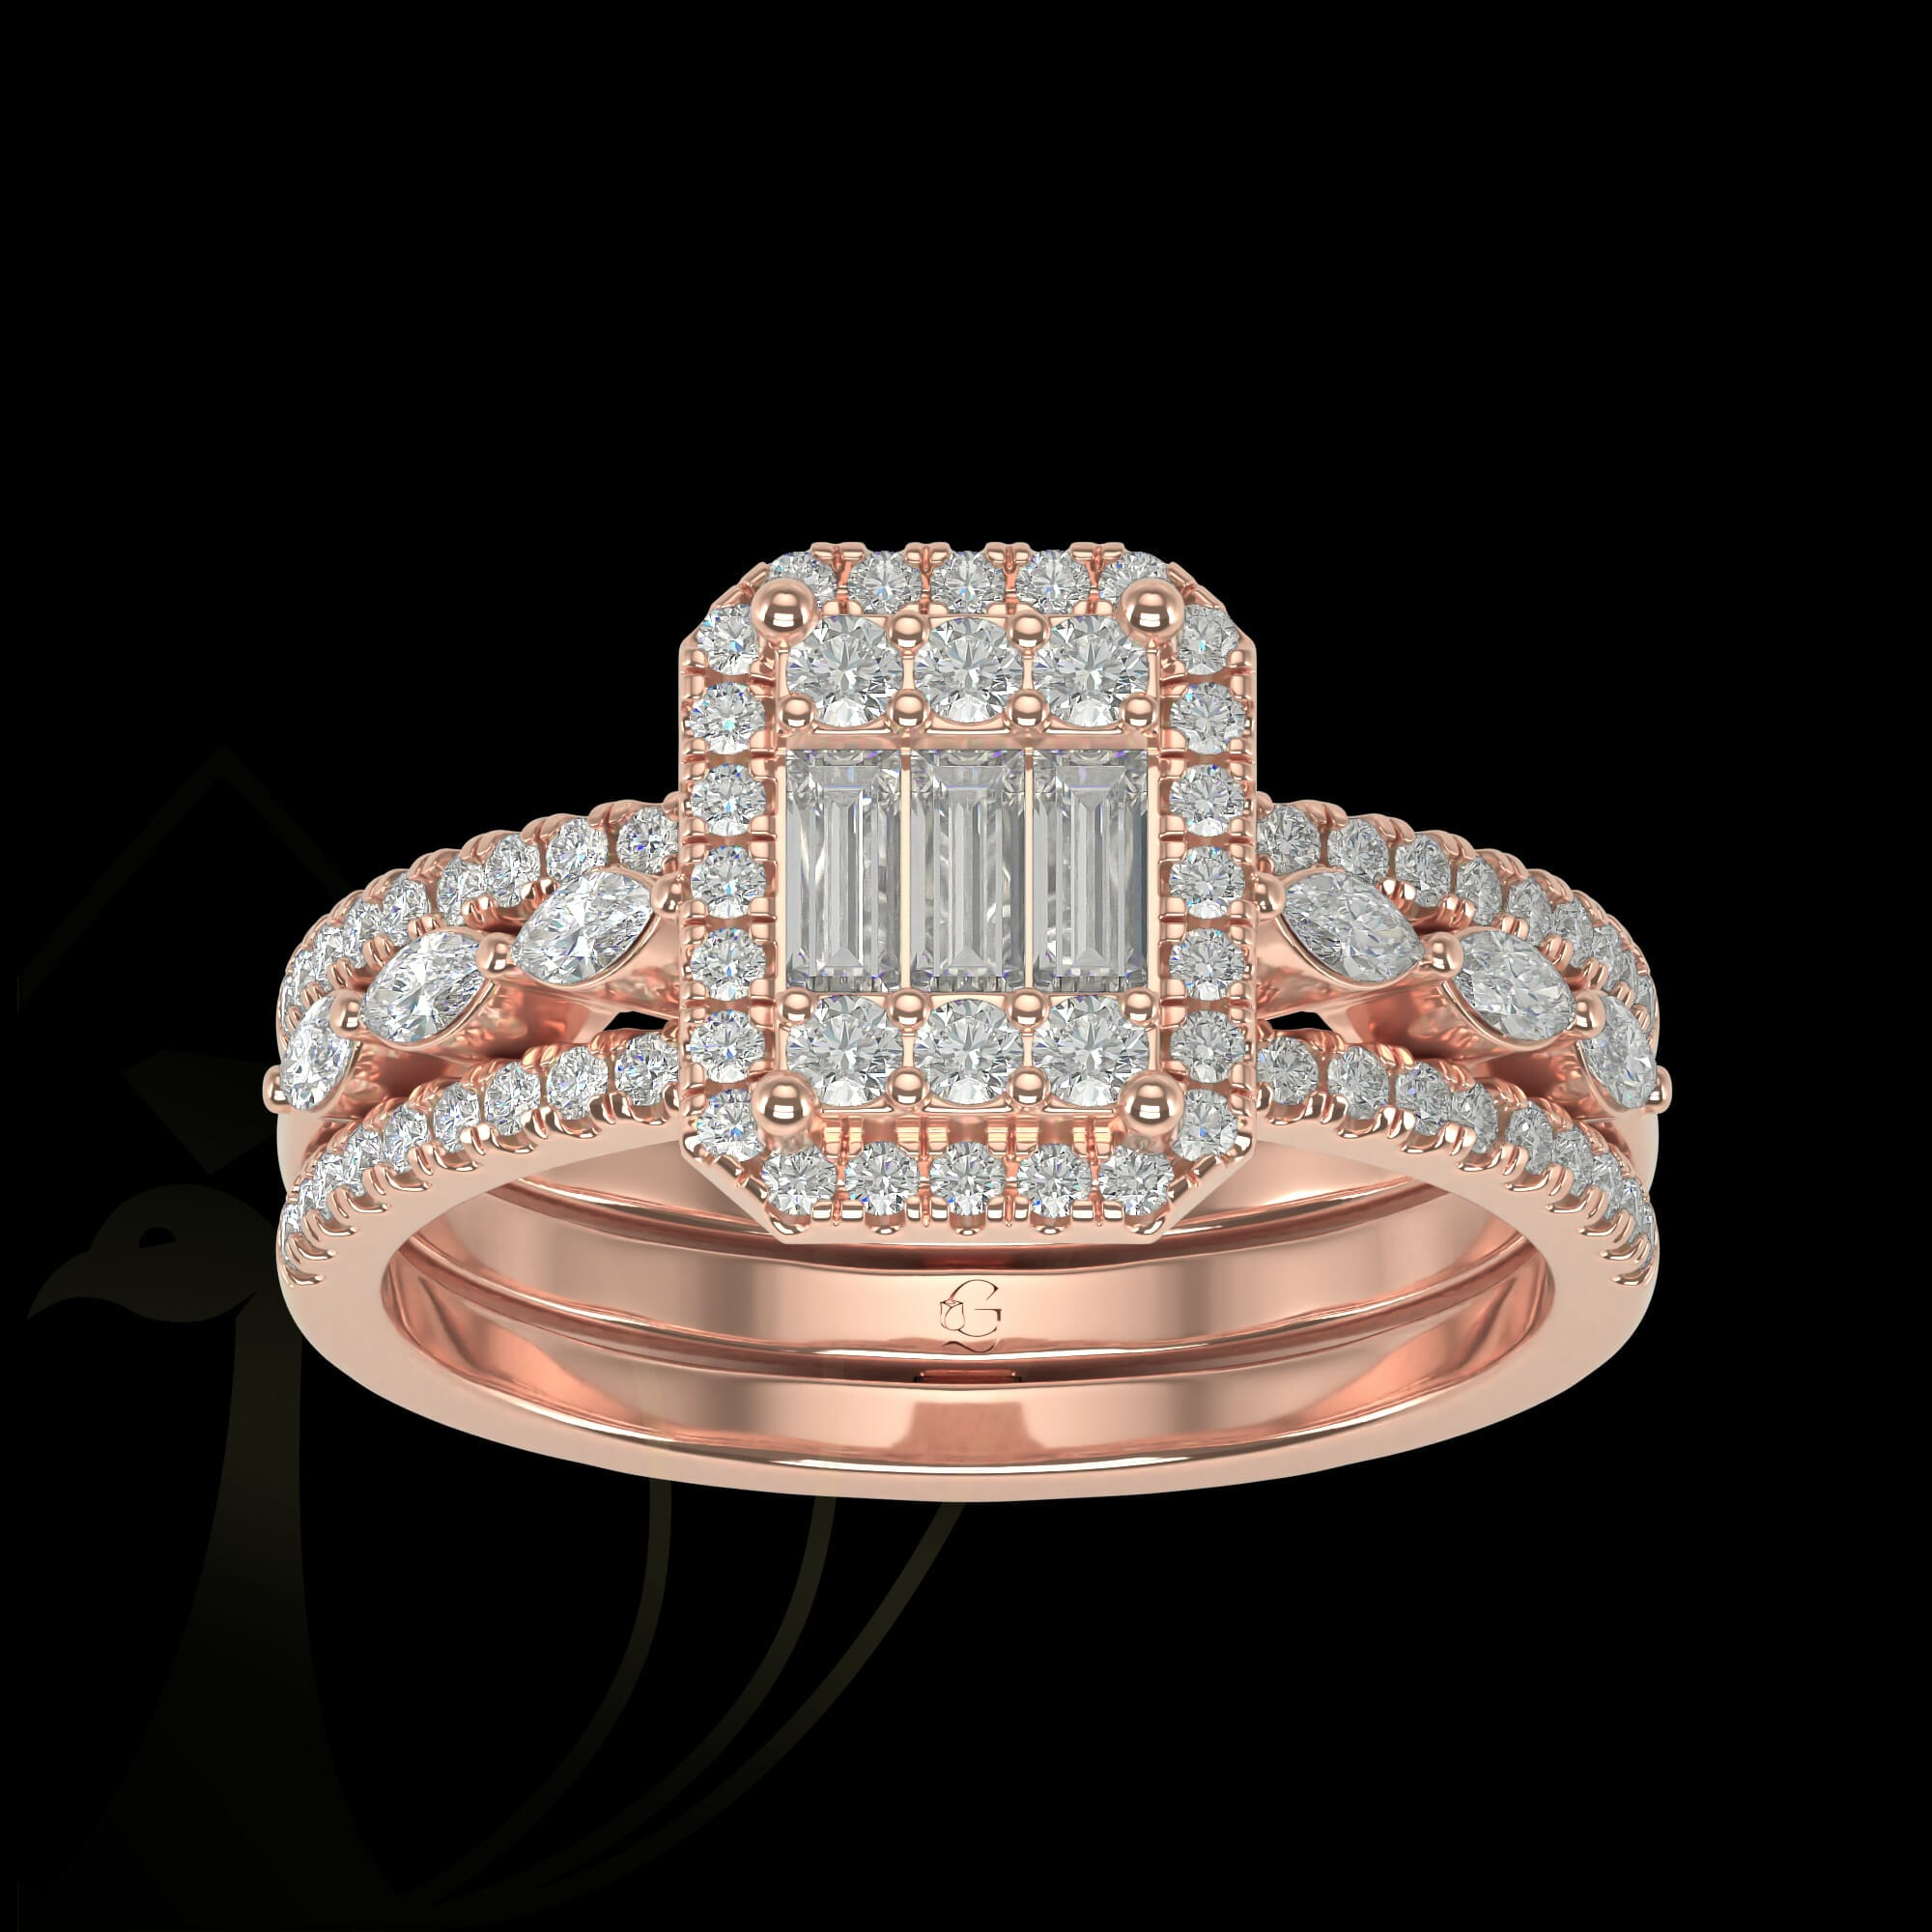 The shining glory diamond ring in trendy rose gold.